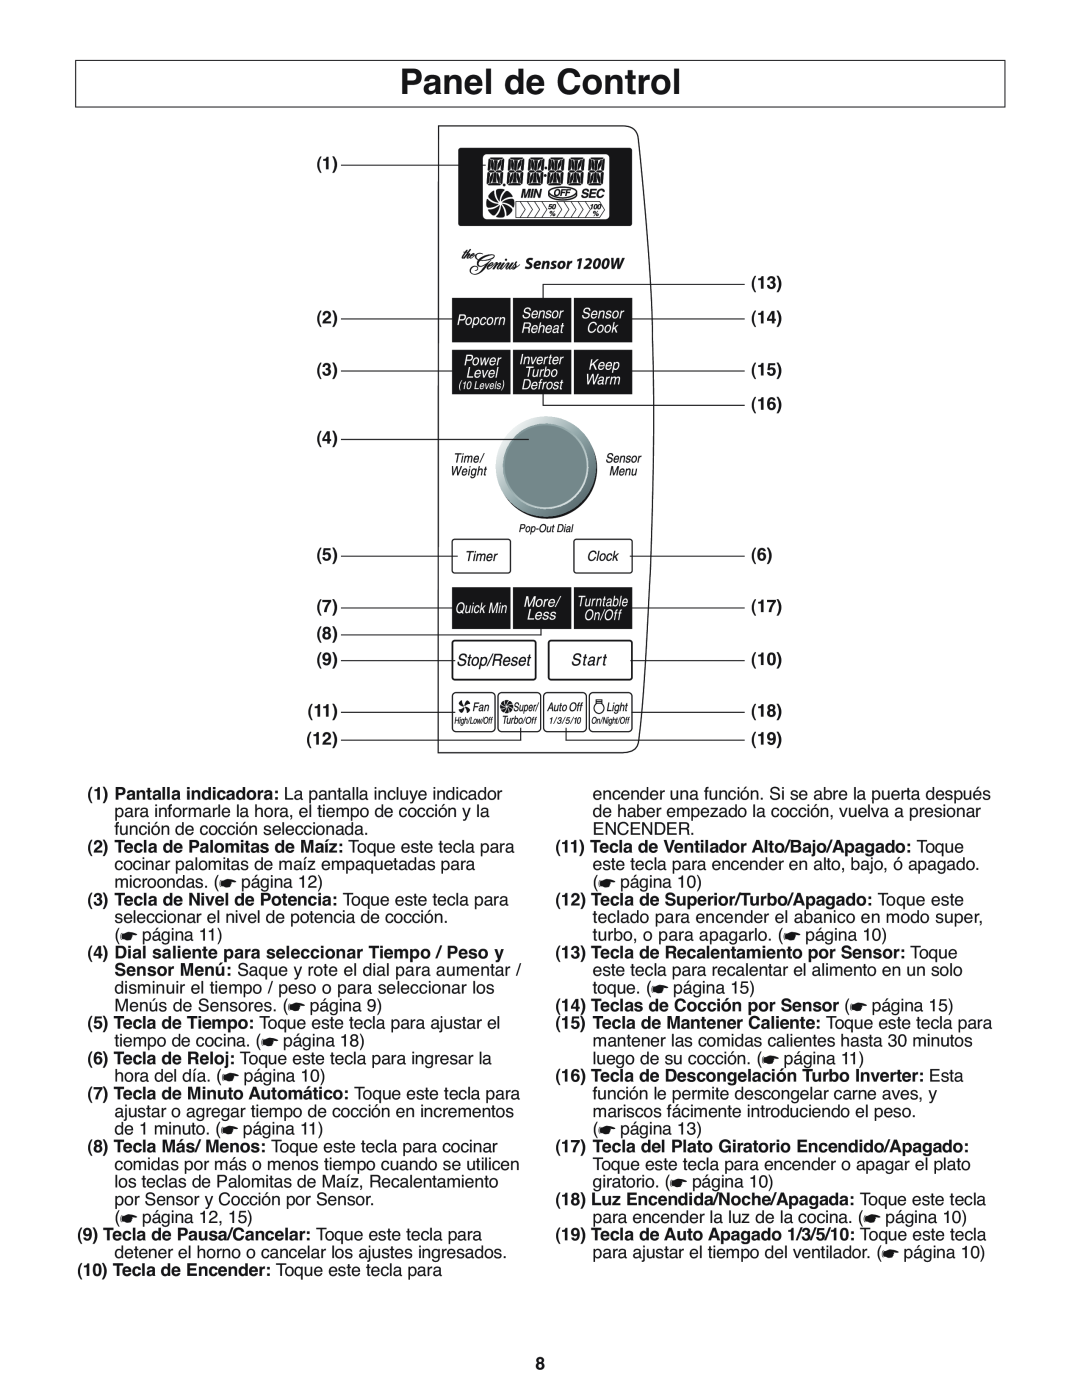 Panasonic NN-H275 operating instructions Panel de Control 